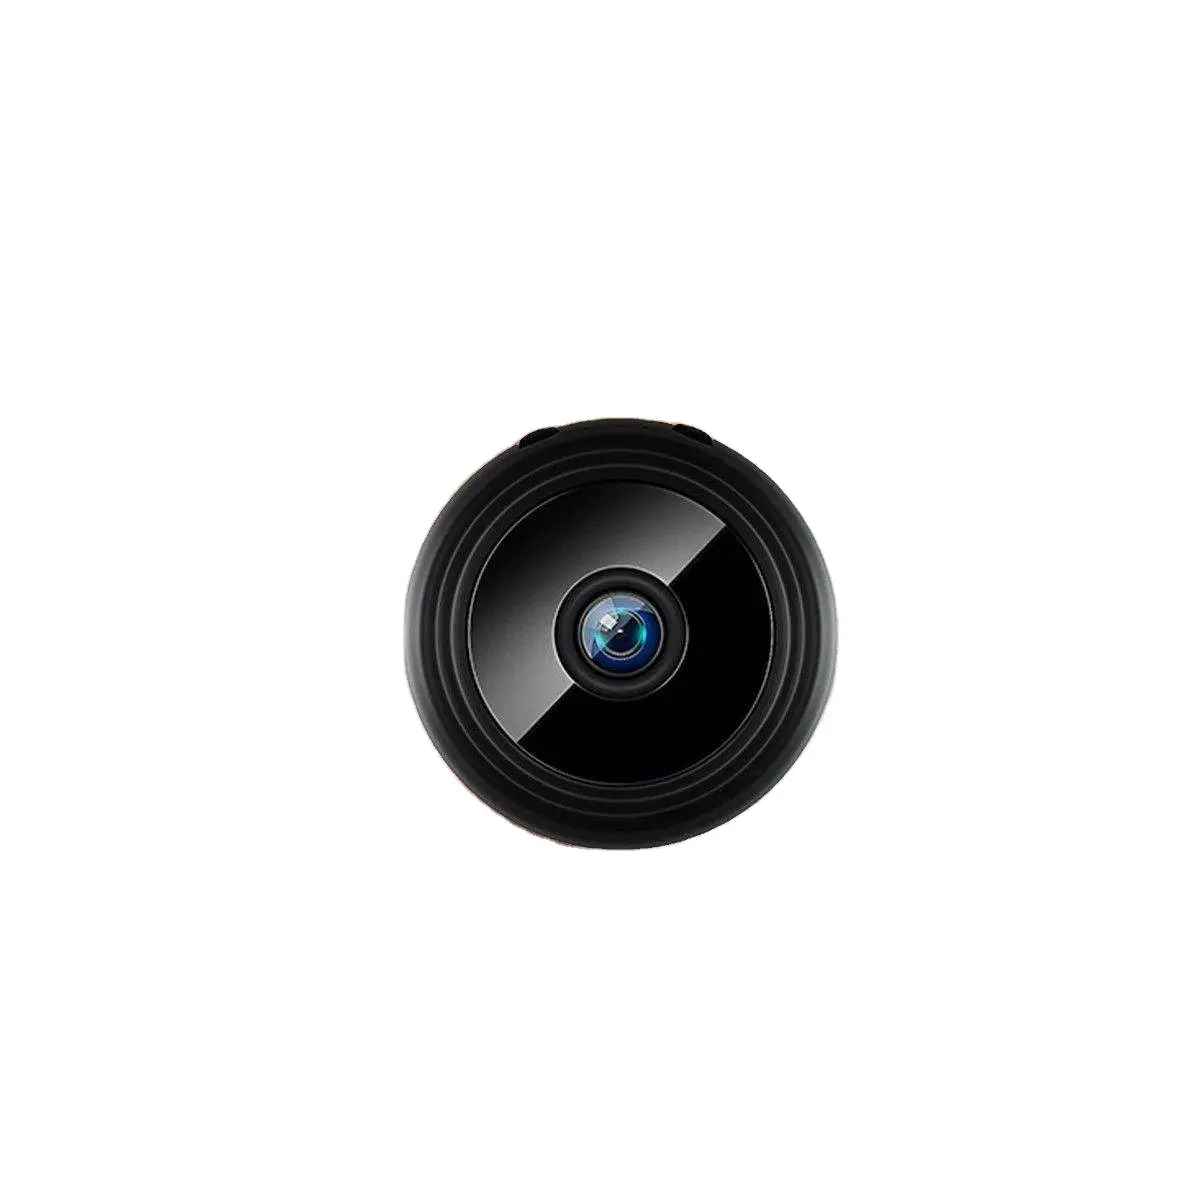 Hot Sales A9 Camera 1080P Hd Resolutie Super Wifi Camera Voor Thuisbeveiliging Minicamera Mini